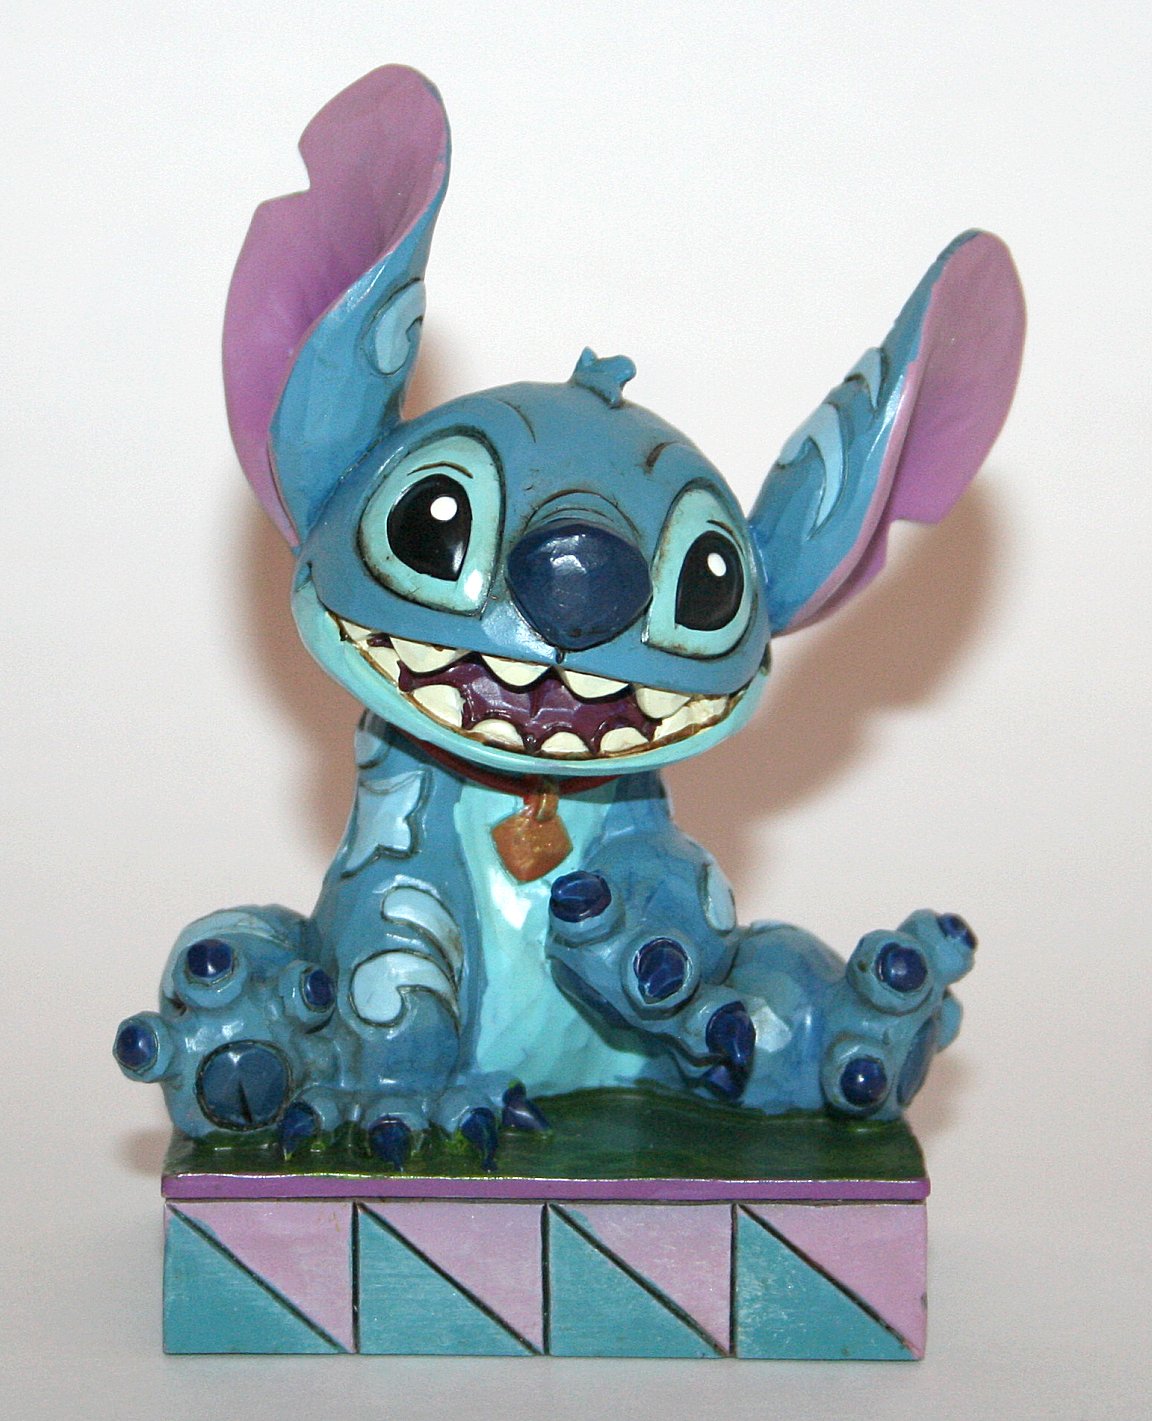 DISNEY TRADITIONS 4016555 Ohana Means Family - Stitch Figurine